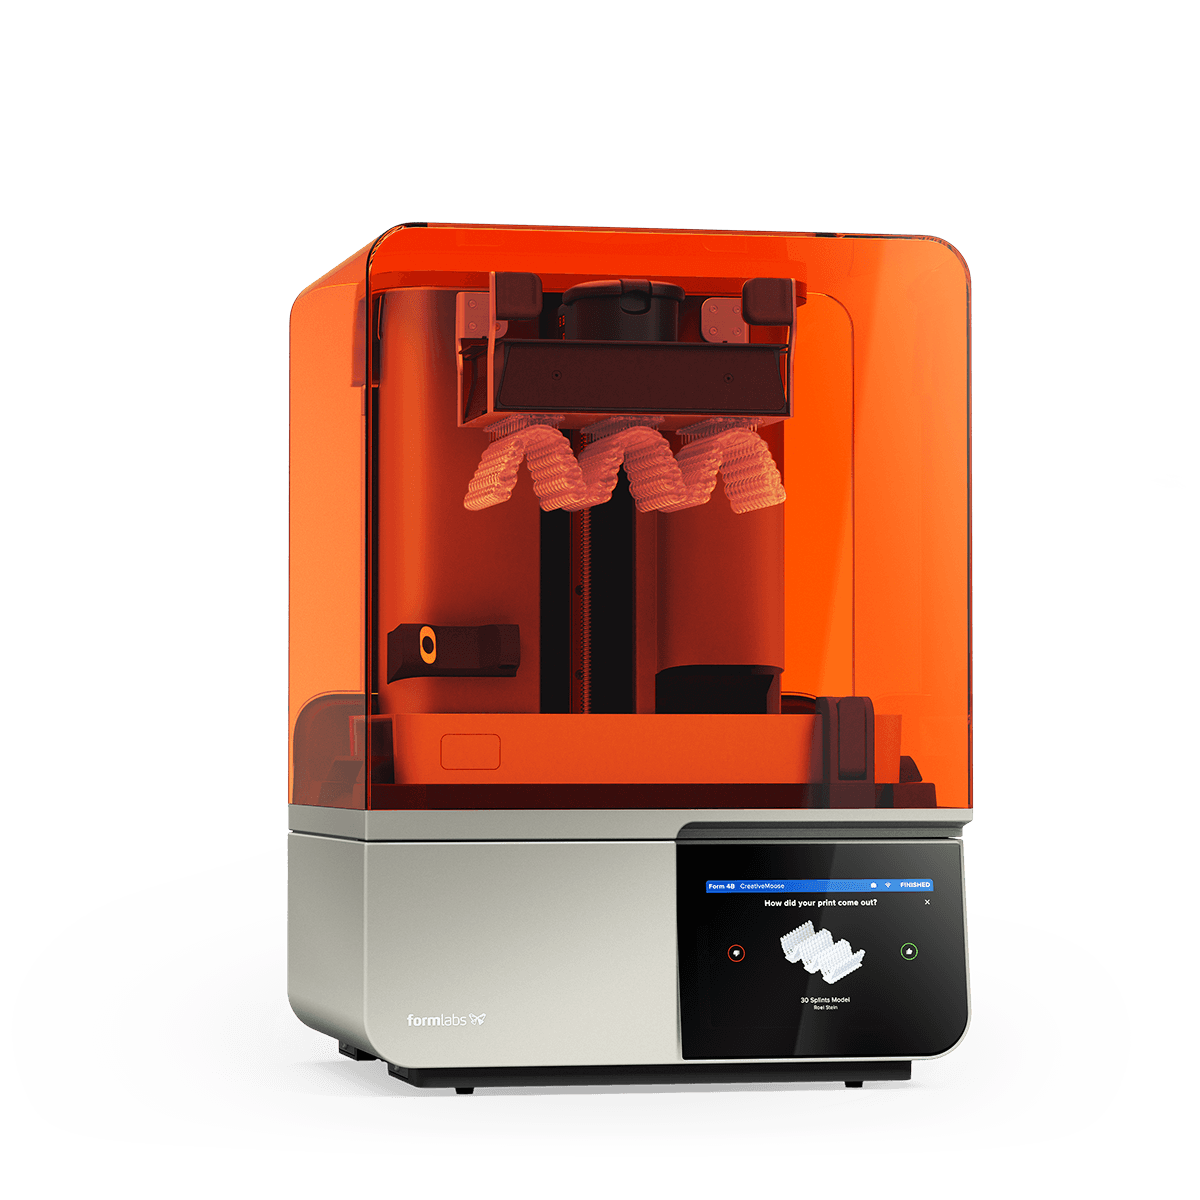 Form 4B dental 3D printer